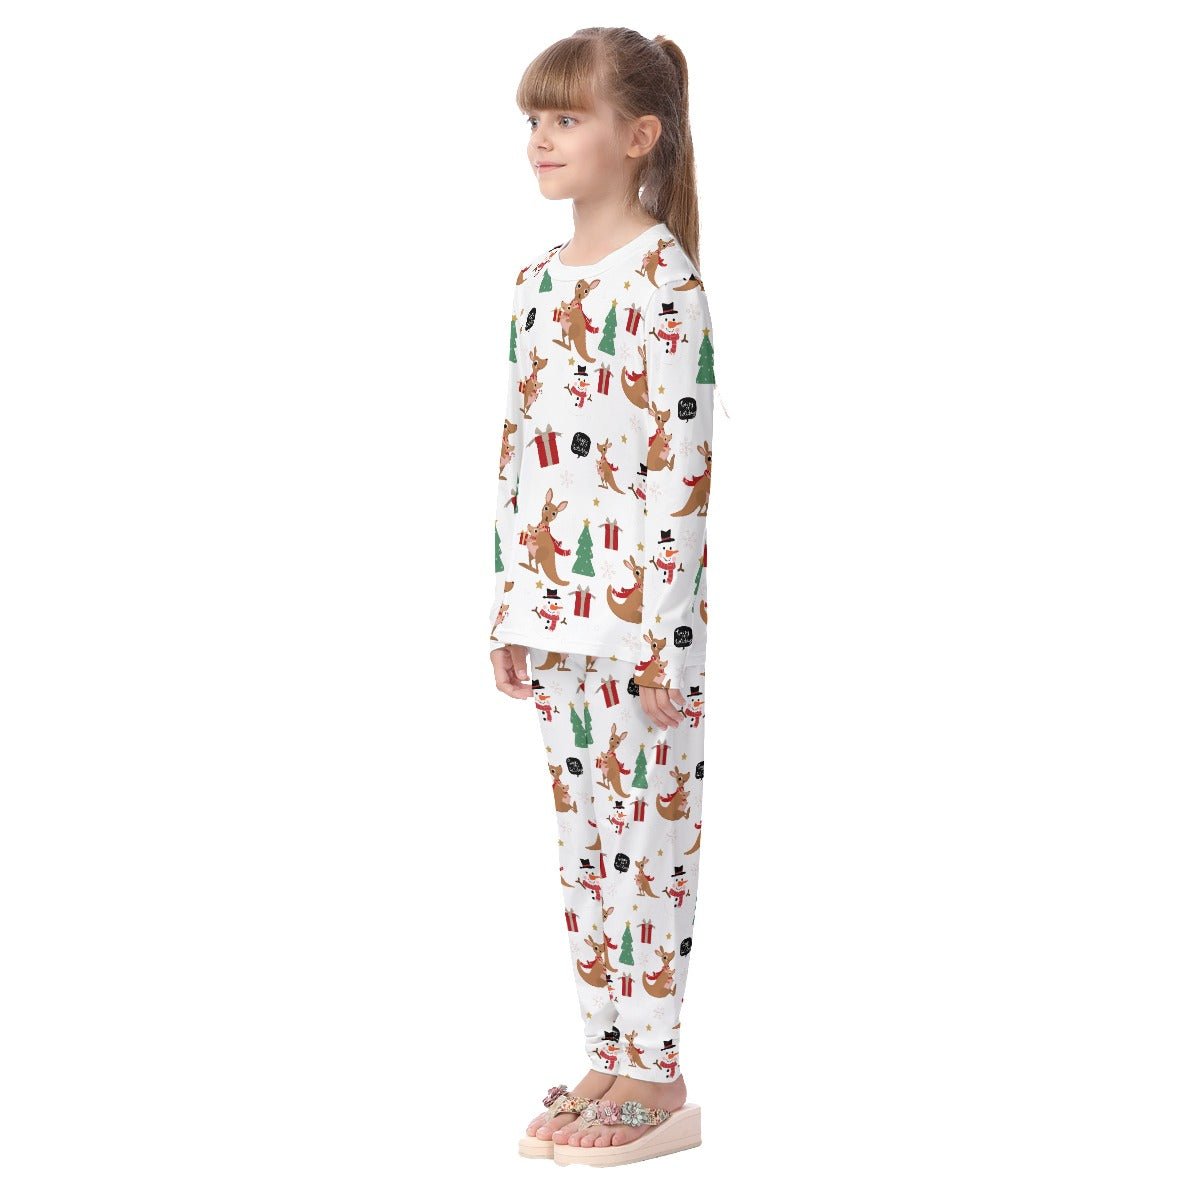 Kids Christmas Pyjama Set - Kangaroo Pattern - Festive Style